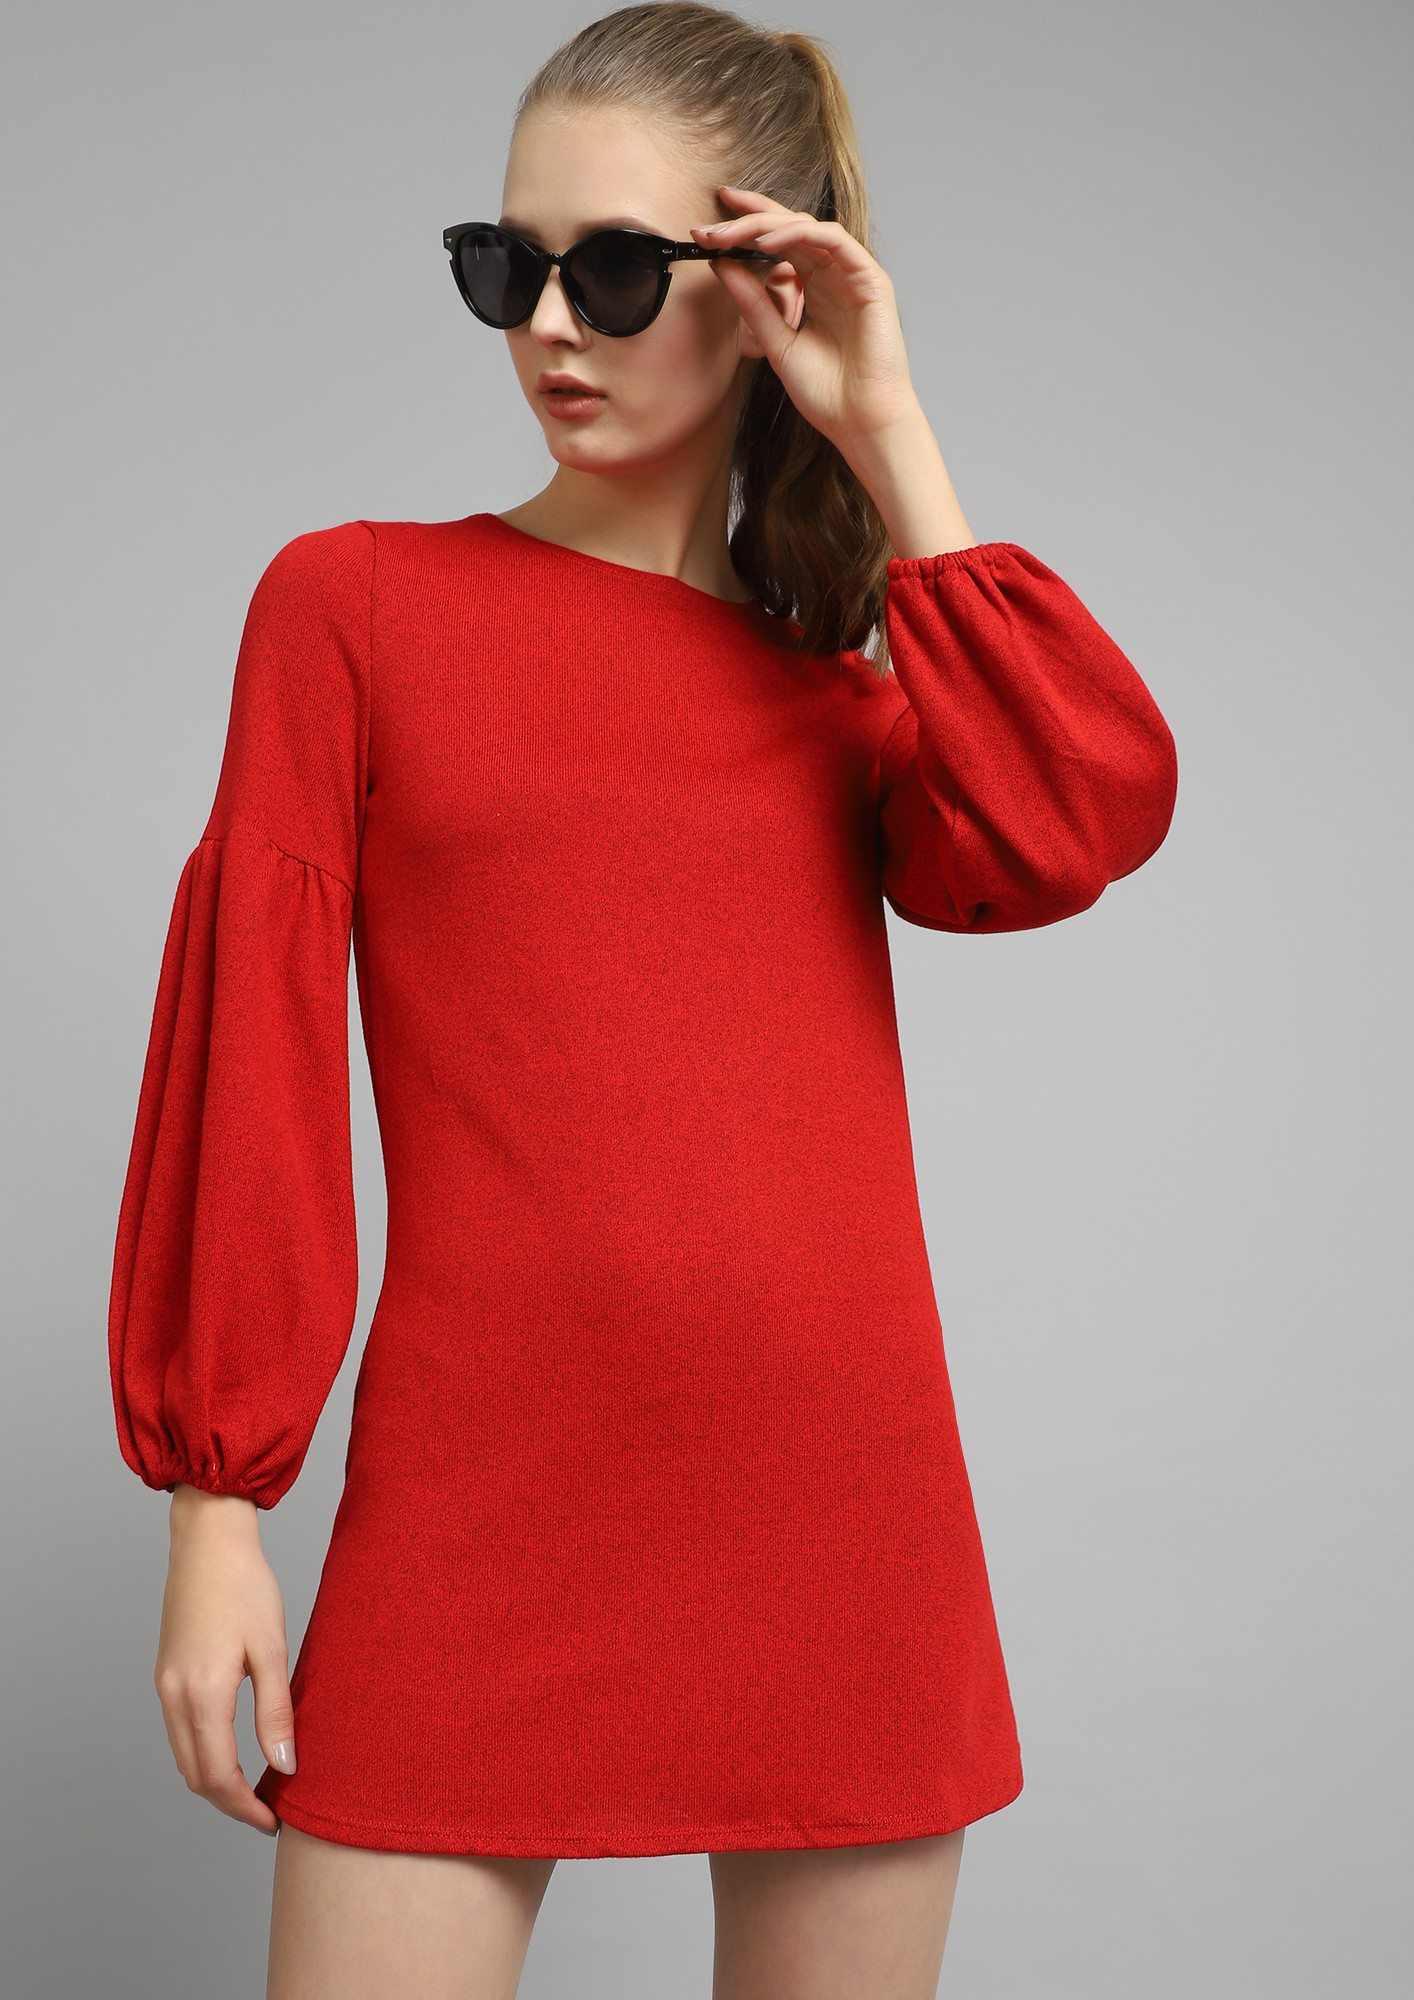 KNIT ATTITUDE RED SHIFT DRESS